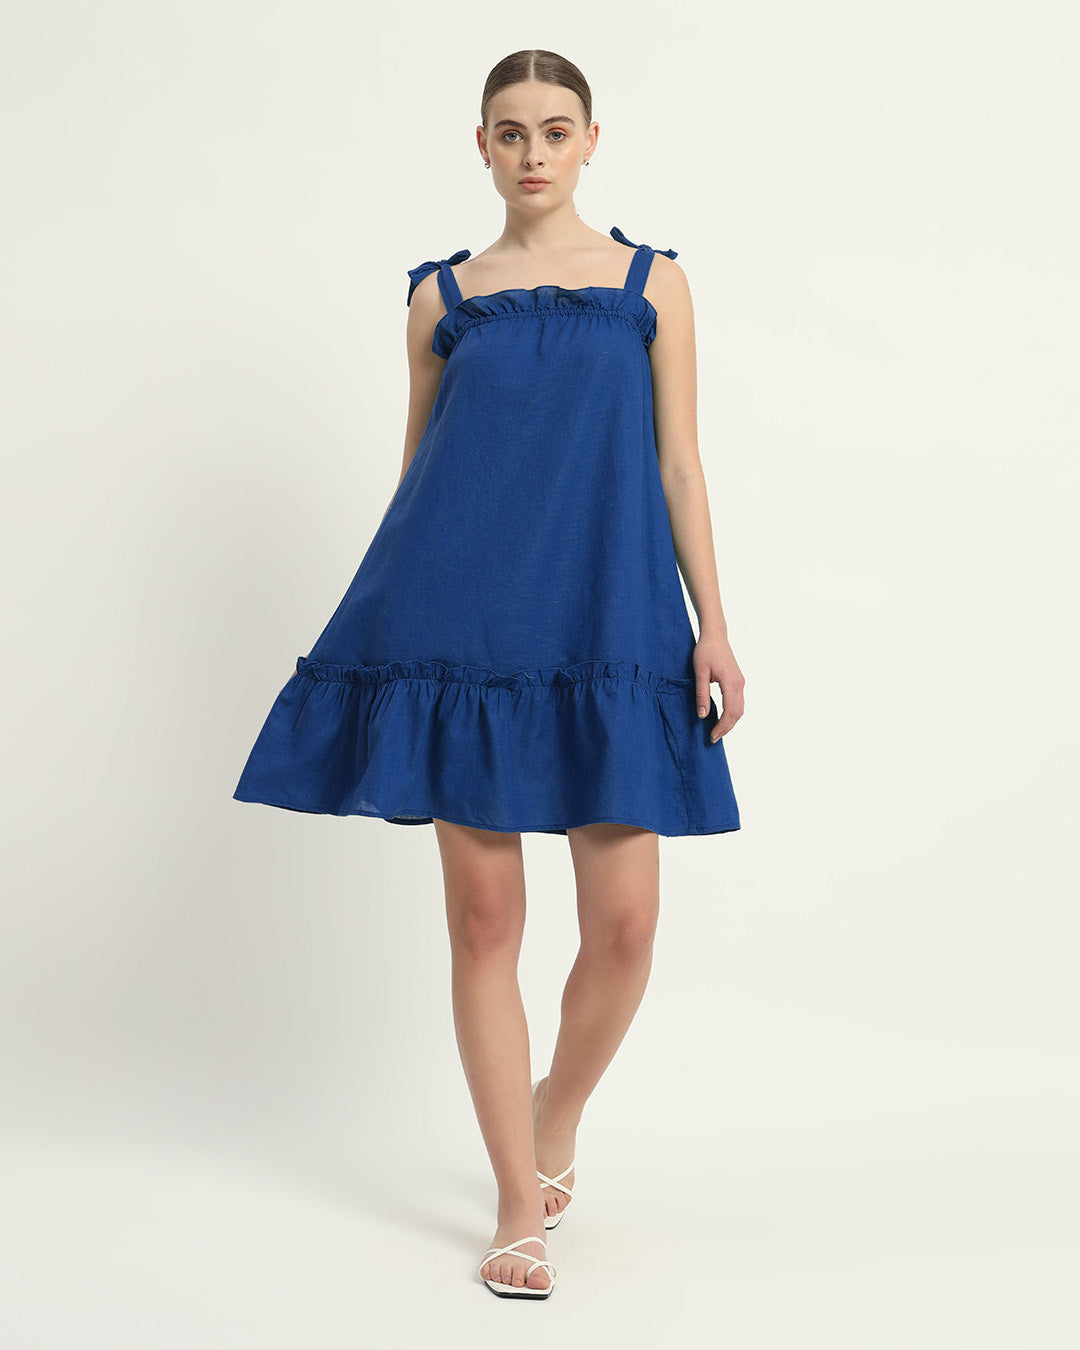 The Cobalt Amalfi Cotton Dress